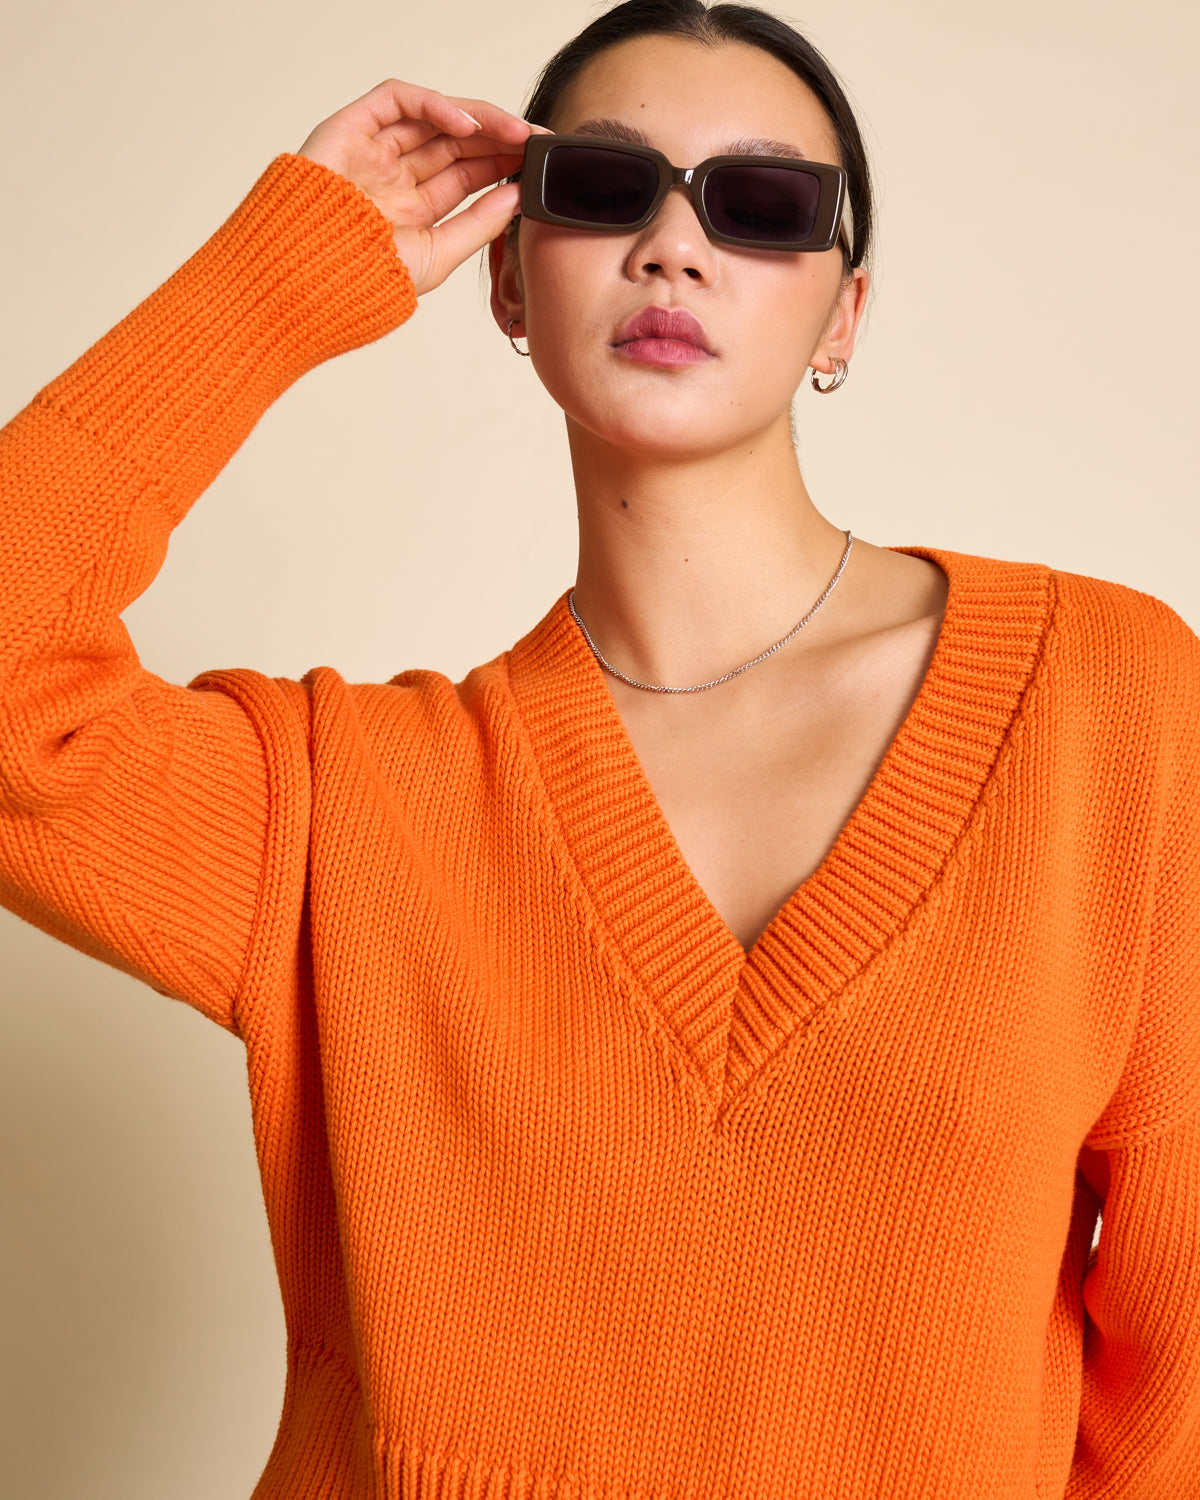 JAN|N JUNE LUZ Pullover, bright orange